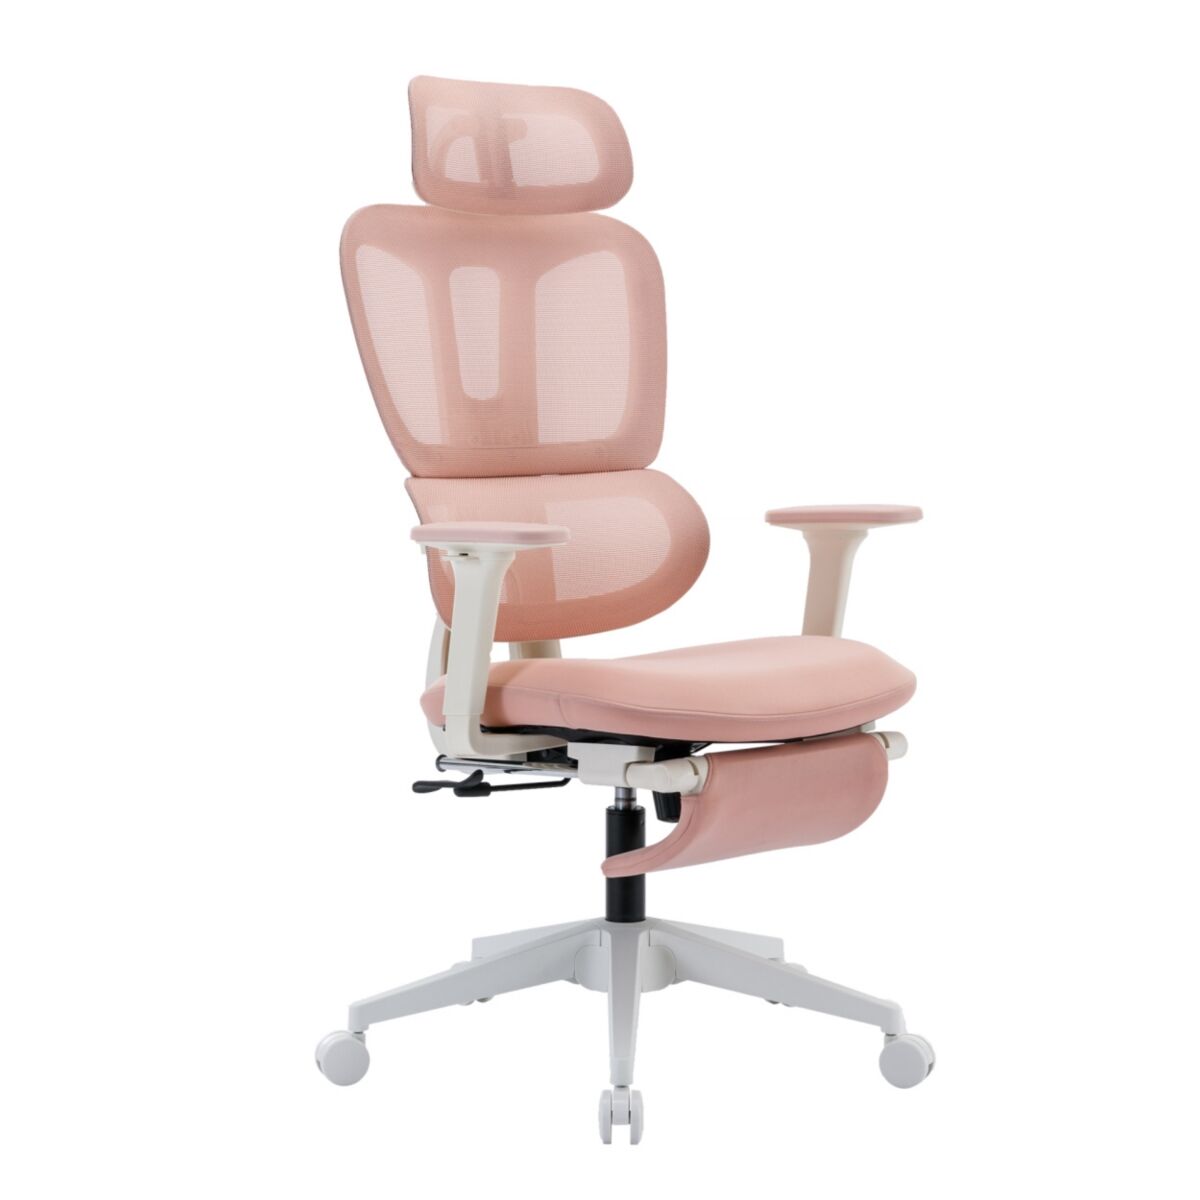 Simplie Fun Ergonomic Mesh Office Chair with 2D Adjustable Armrest, High Back Desk Computer Chair, Ergonomic Office Chair with Wheels for Home & Office - Pink